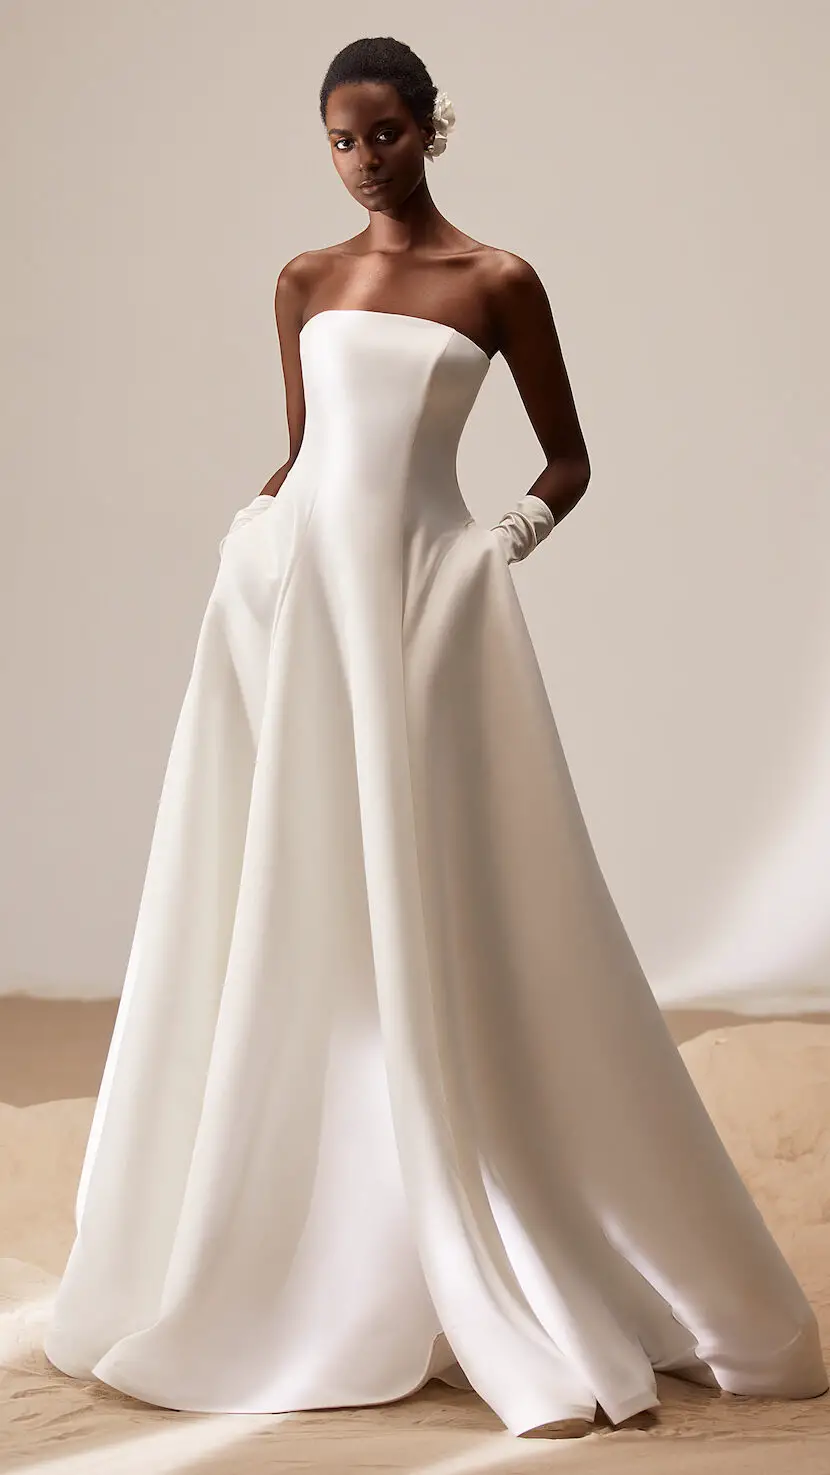 Simple Elegant Wedding Dress by Milla Nova - Simonelle white lace